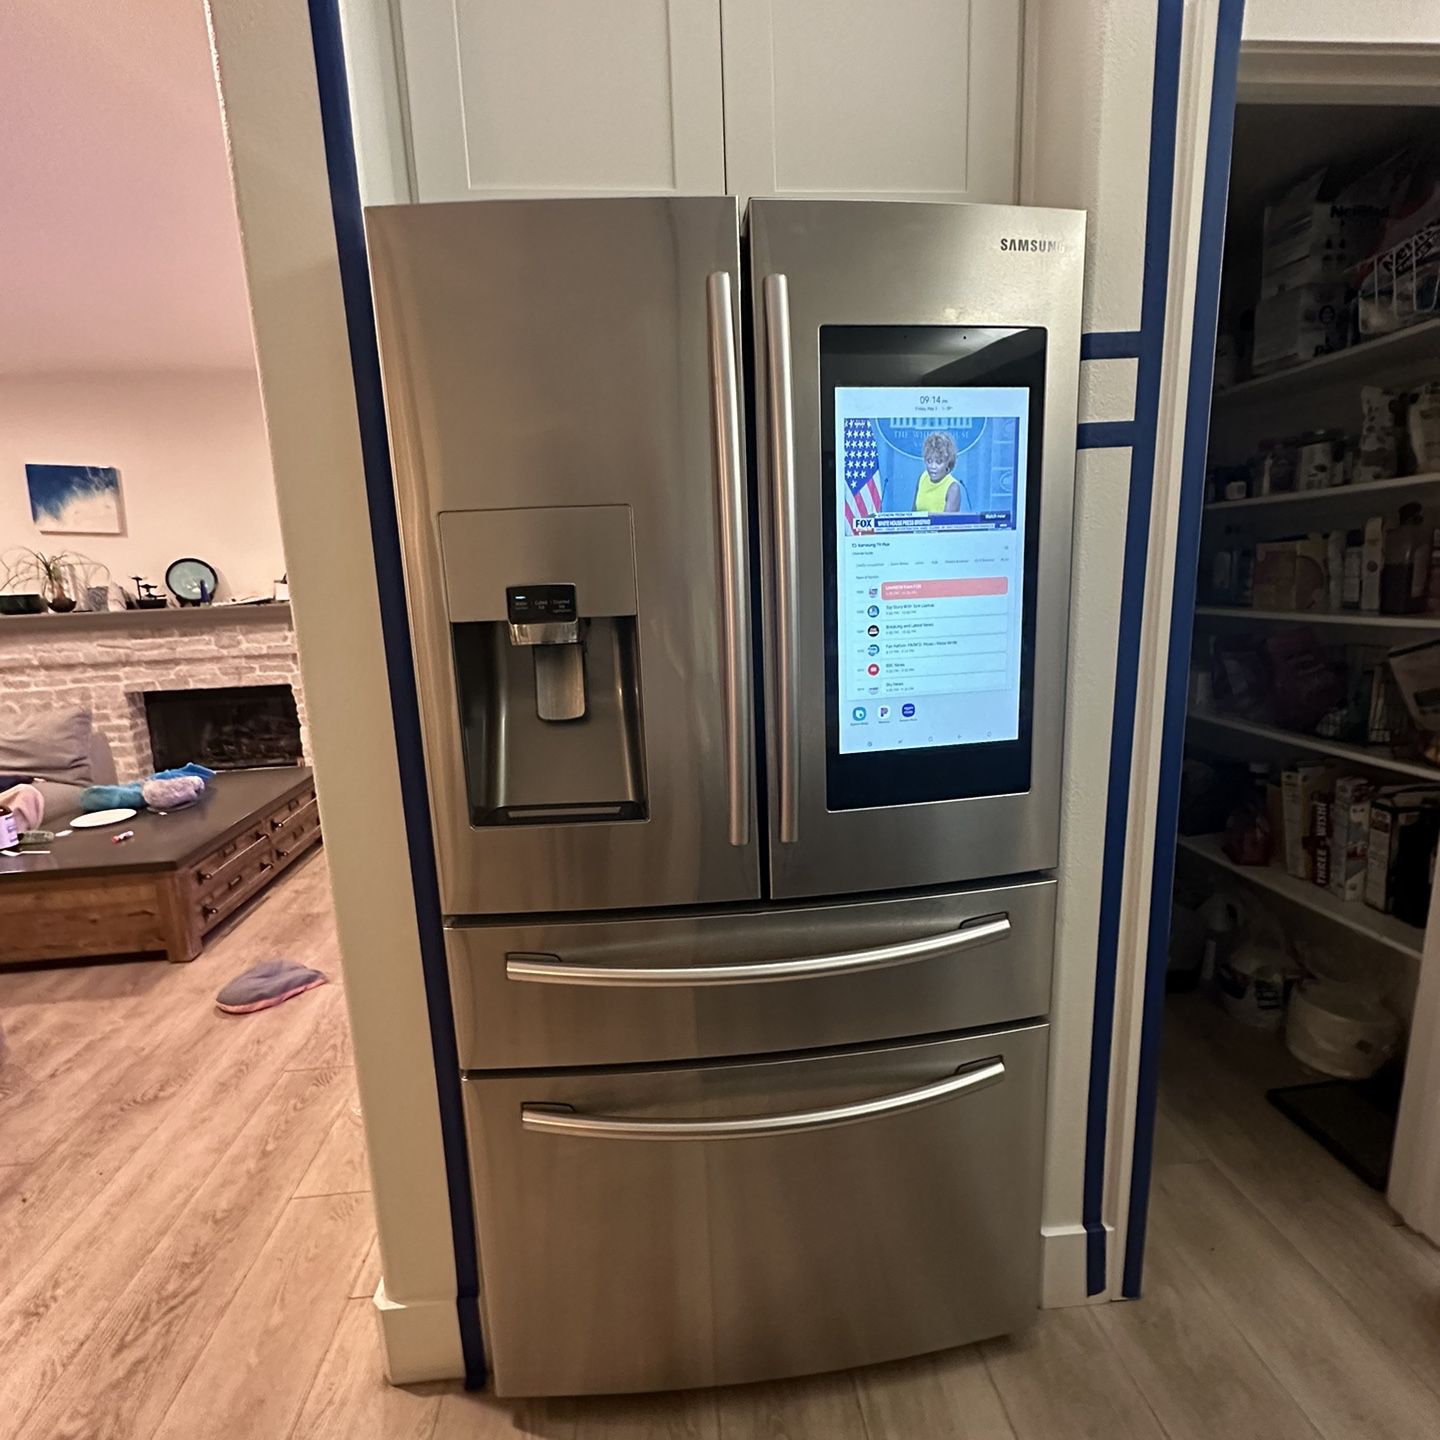 Samsung Refrigerator With Smart Screen